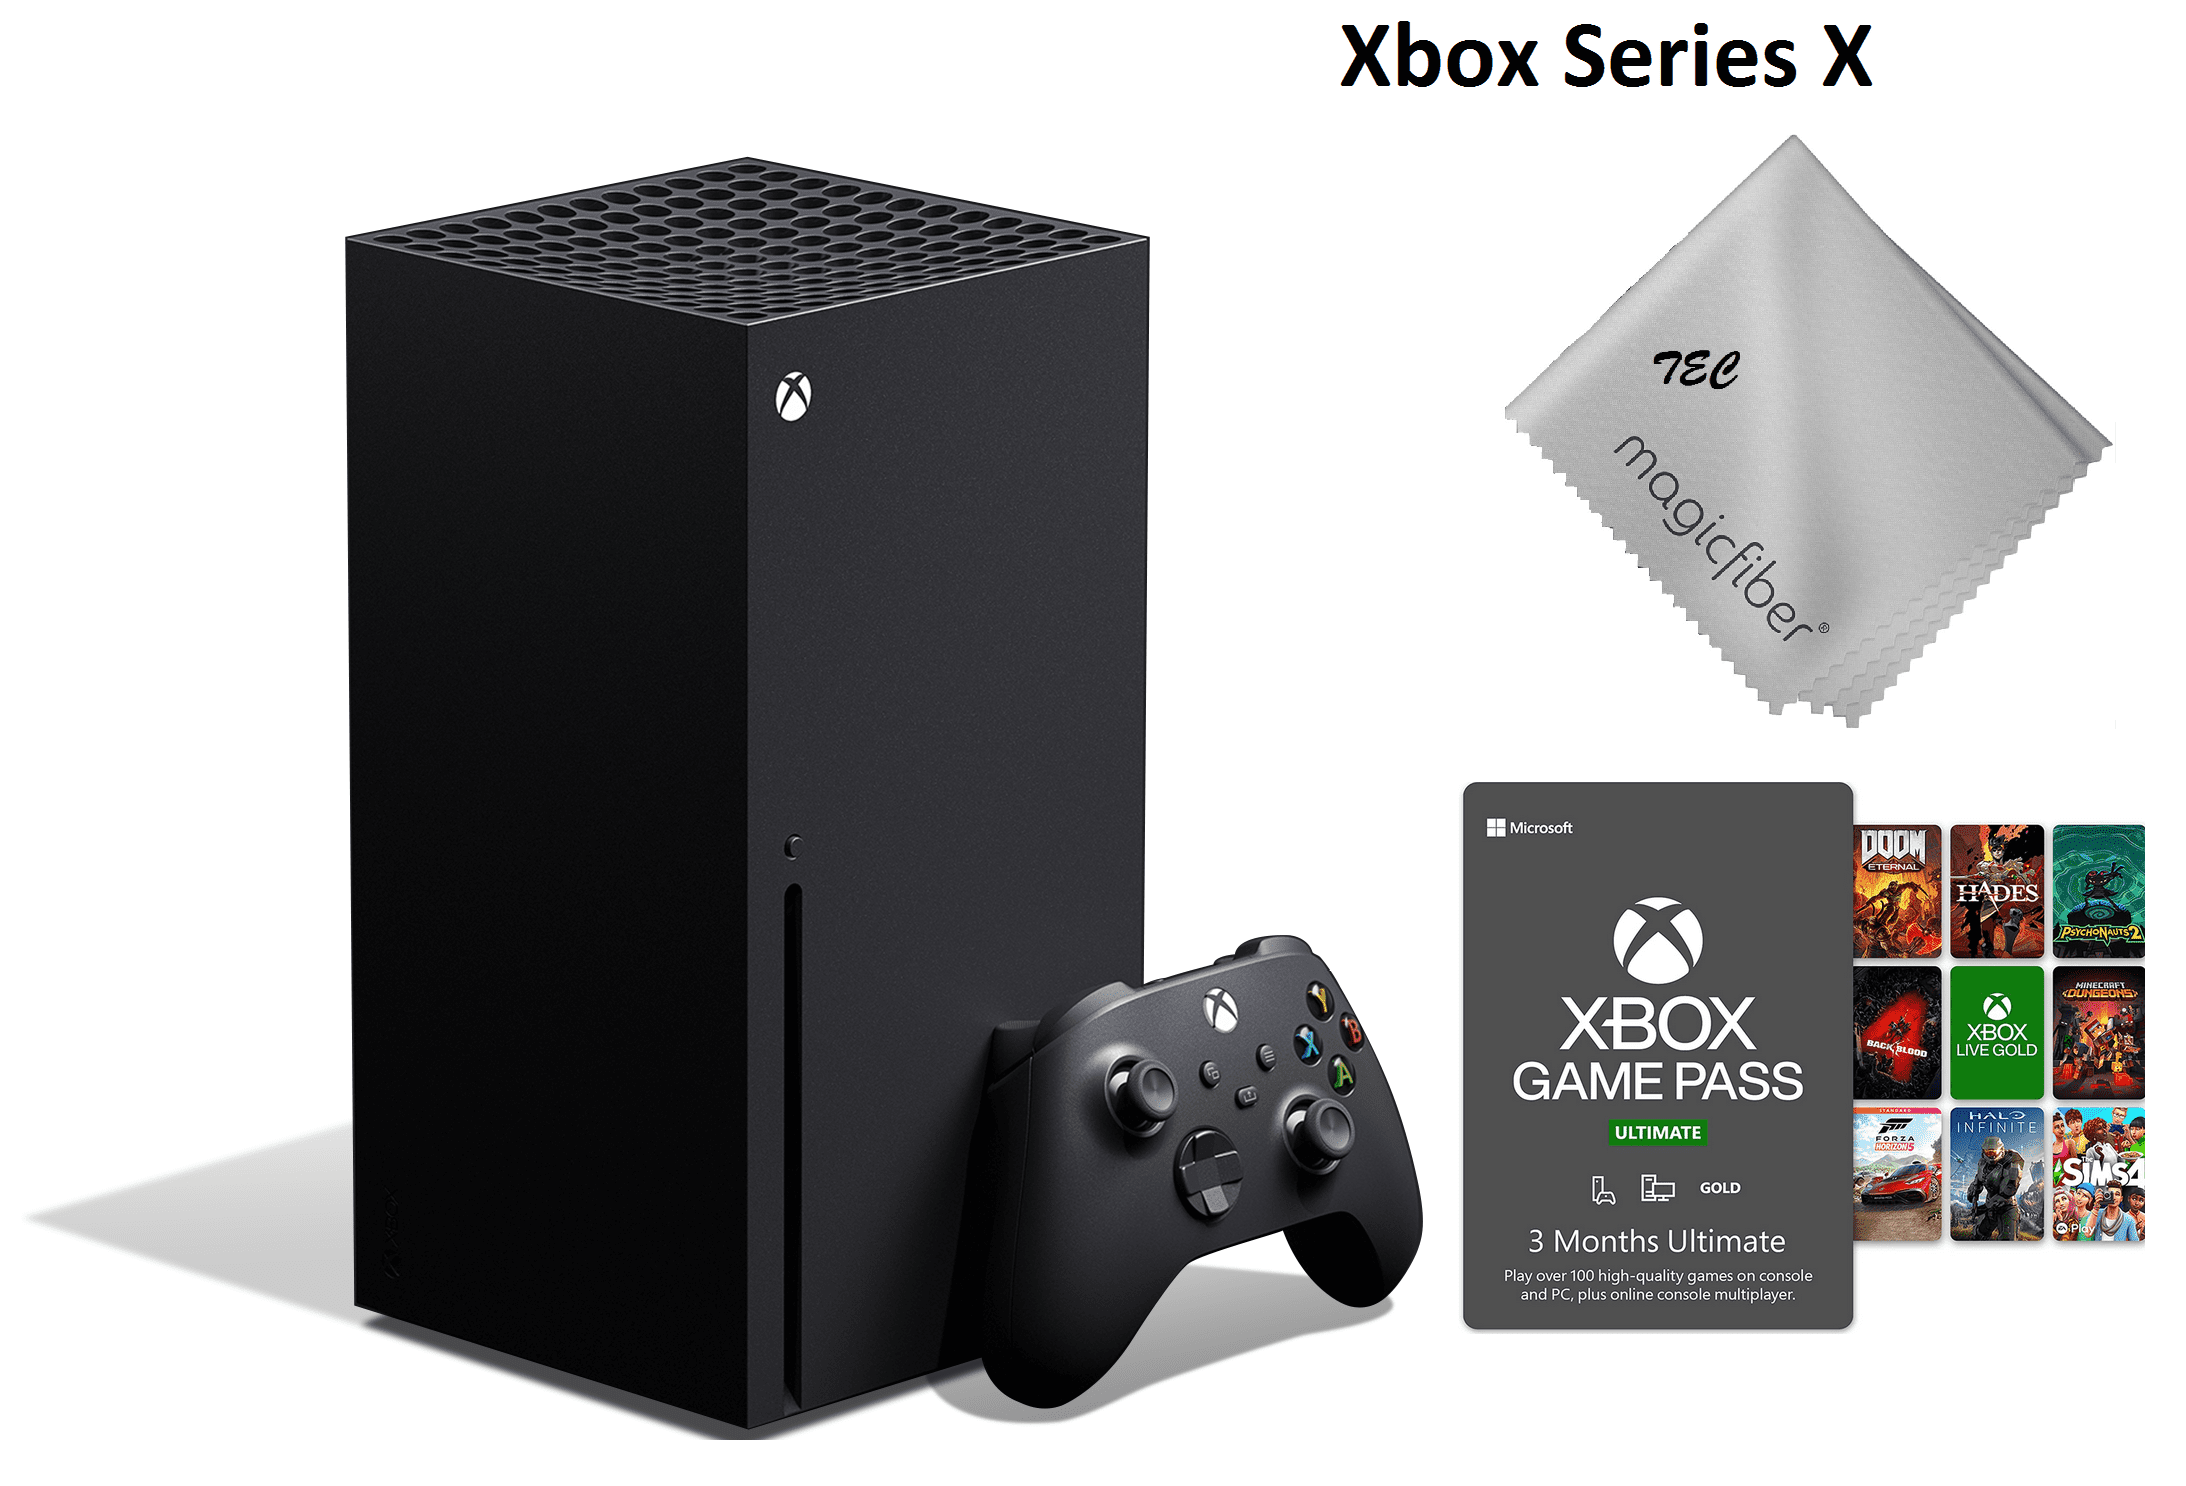 Microsoft Xbox Series X 1TB Console with HALO Infinite Video Game Bundle